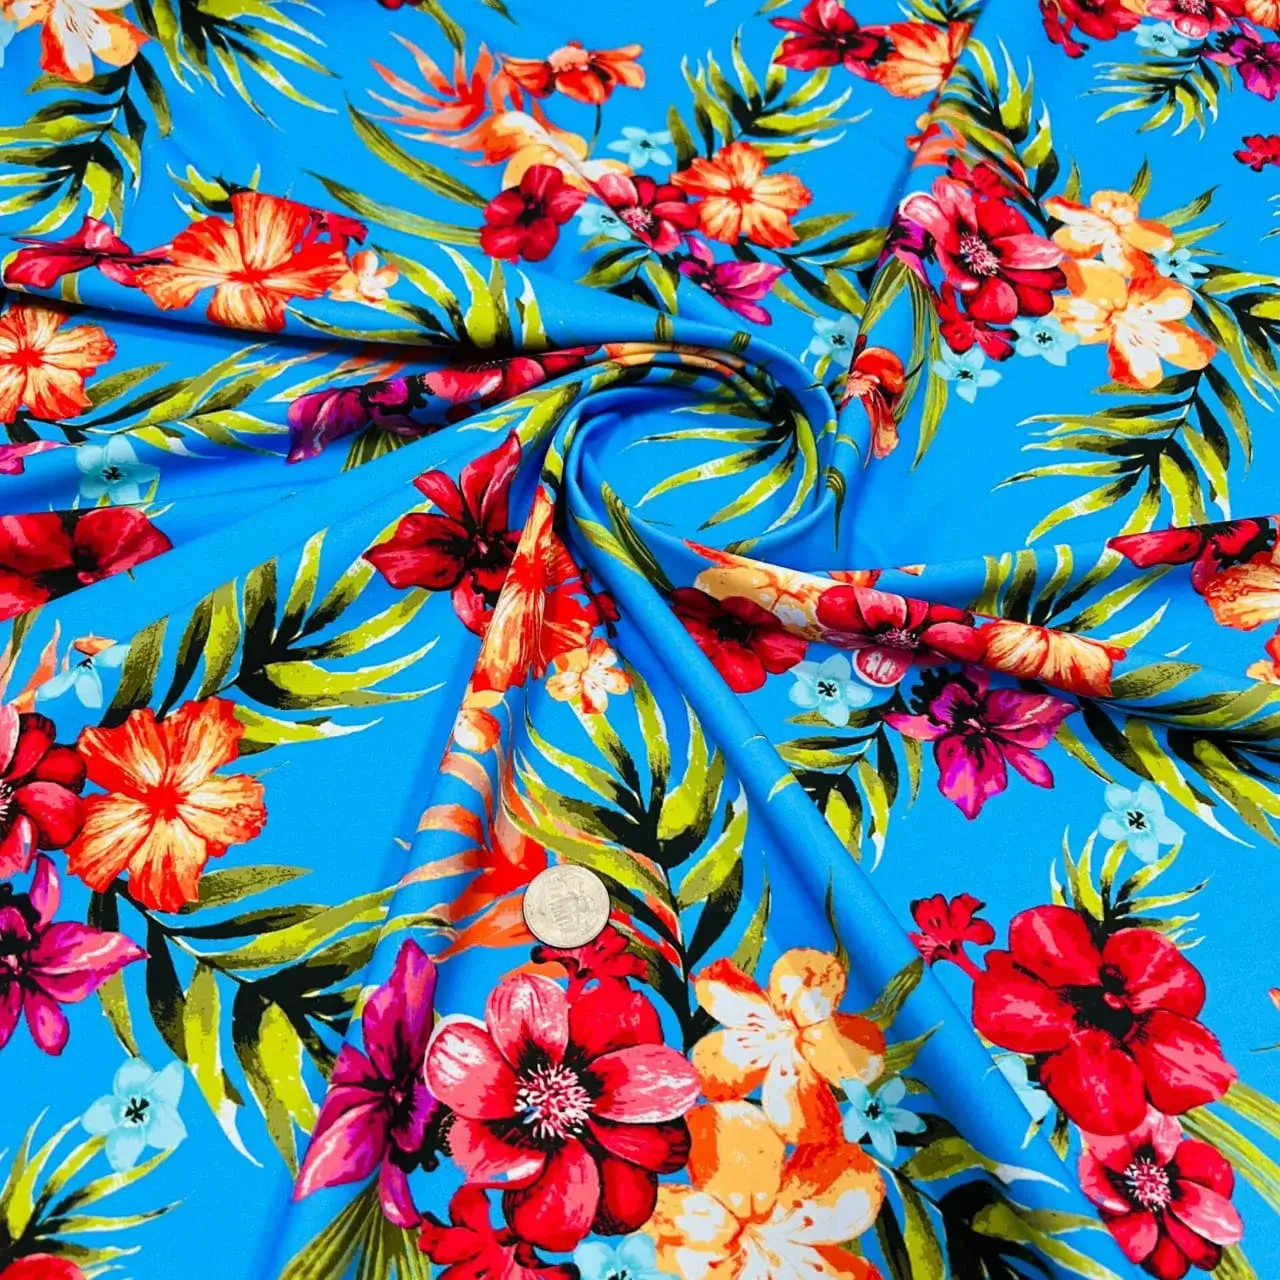 Swimwear Fabric Spandex 4-way Stretch Nylon Hawaiian Tropical